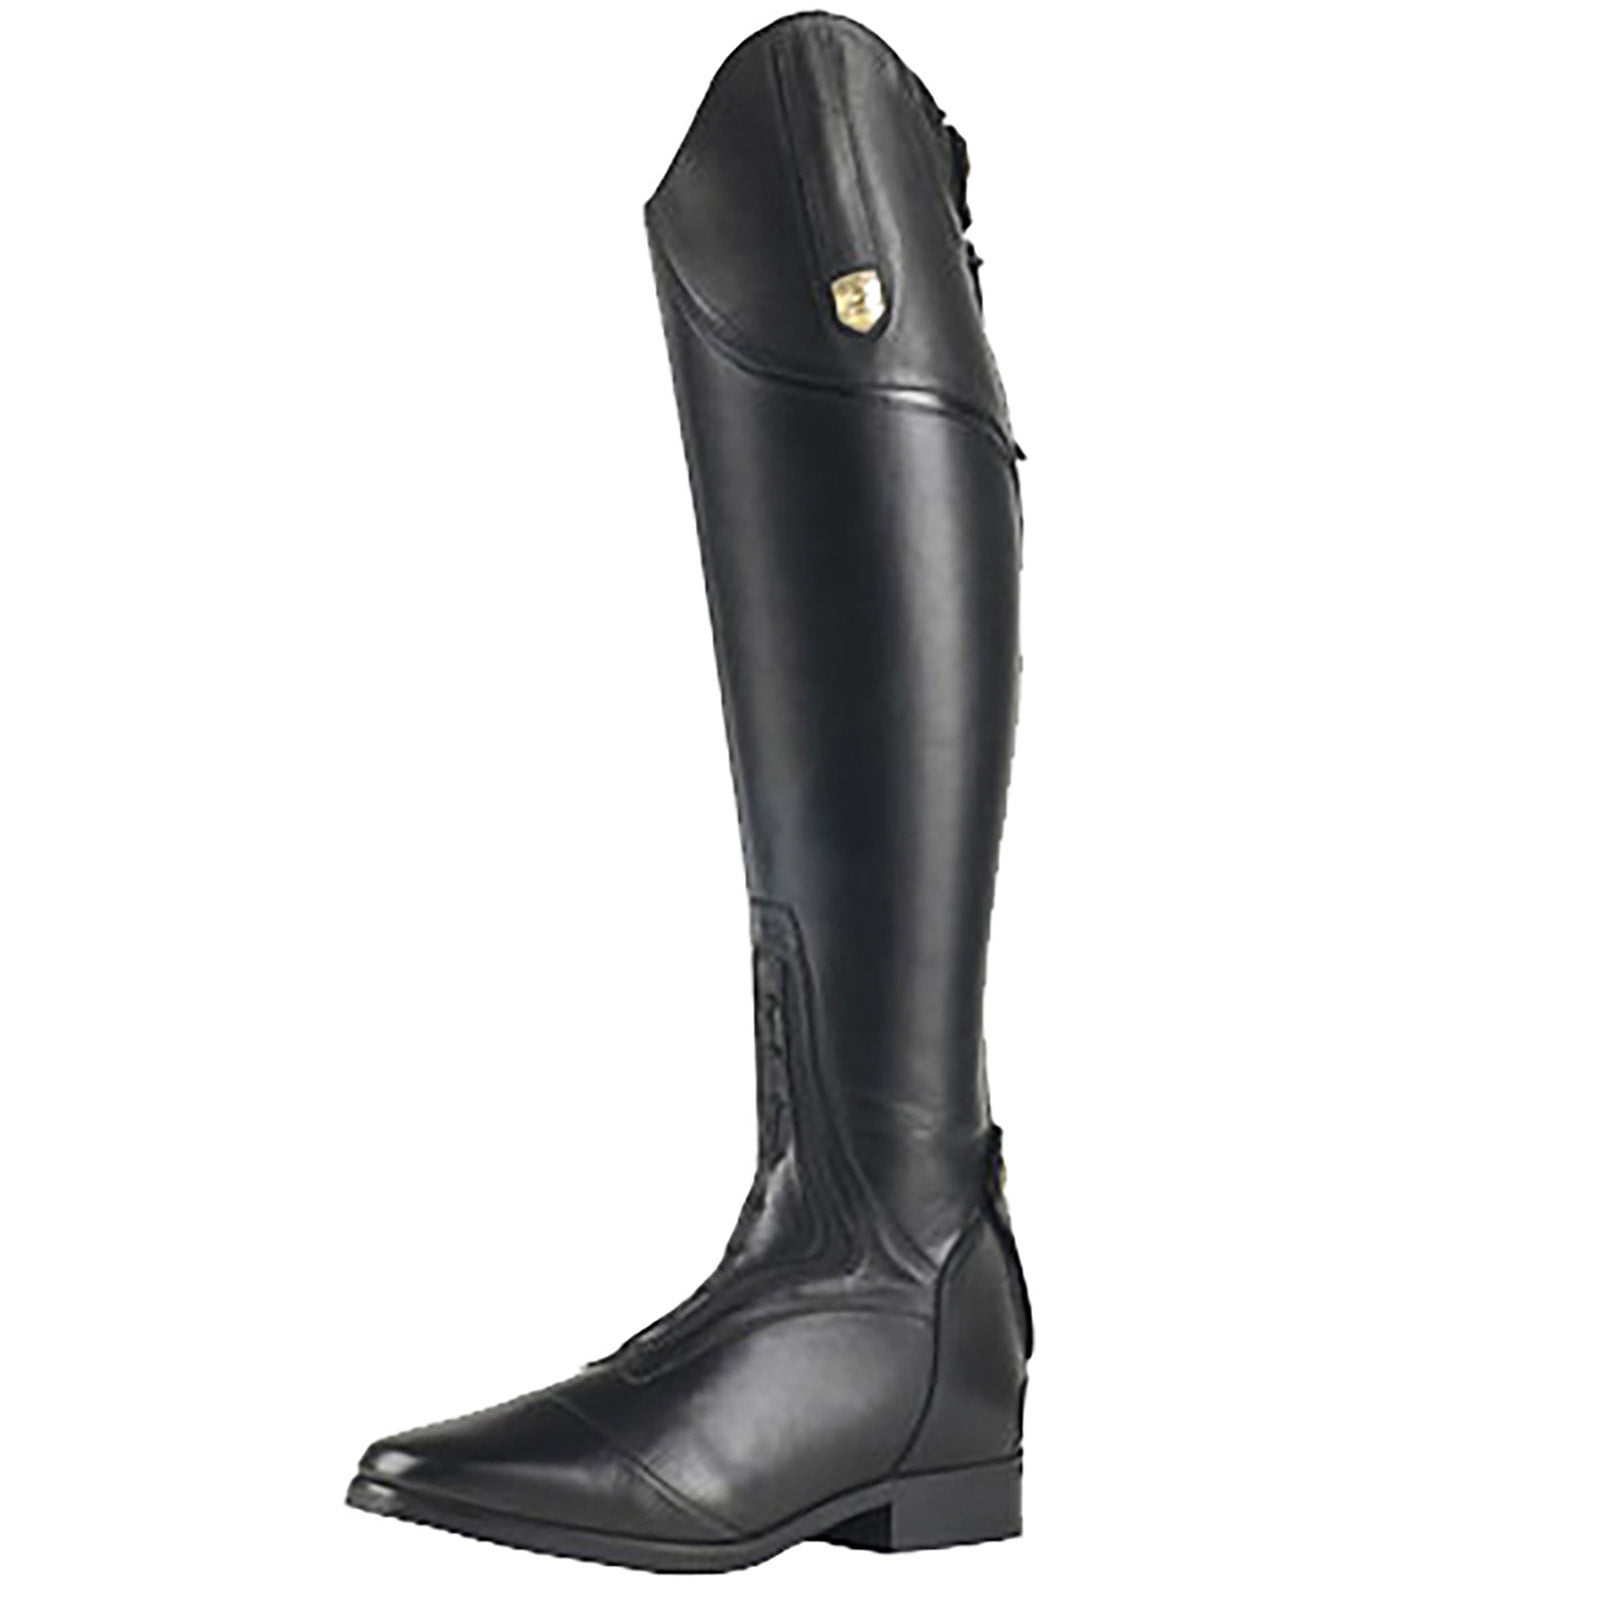 Equestrian Long Rubber  Riding Boots Size UK 6 EU 39 Black BOXED 